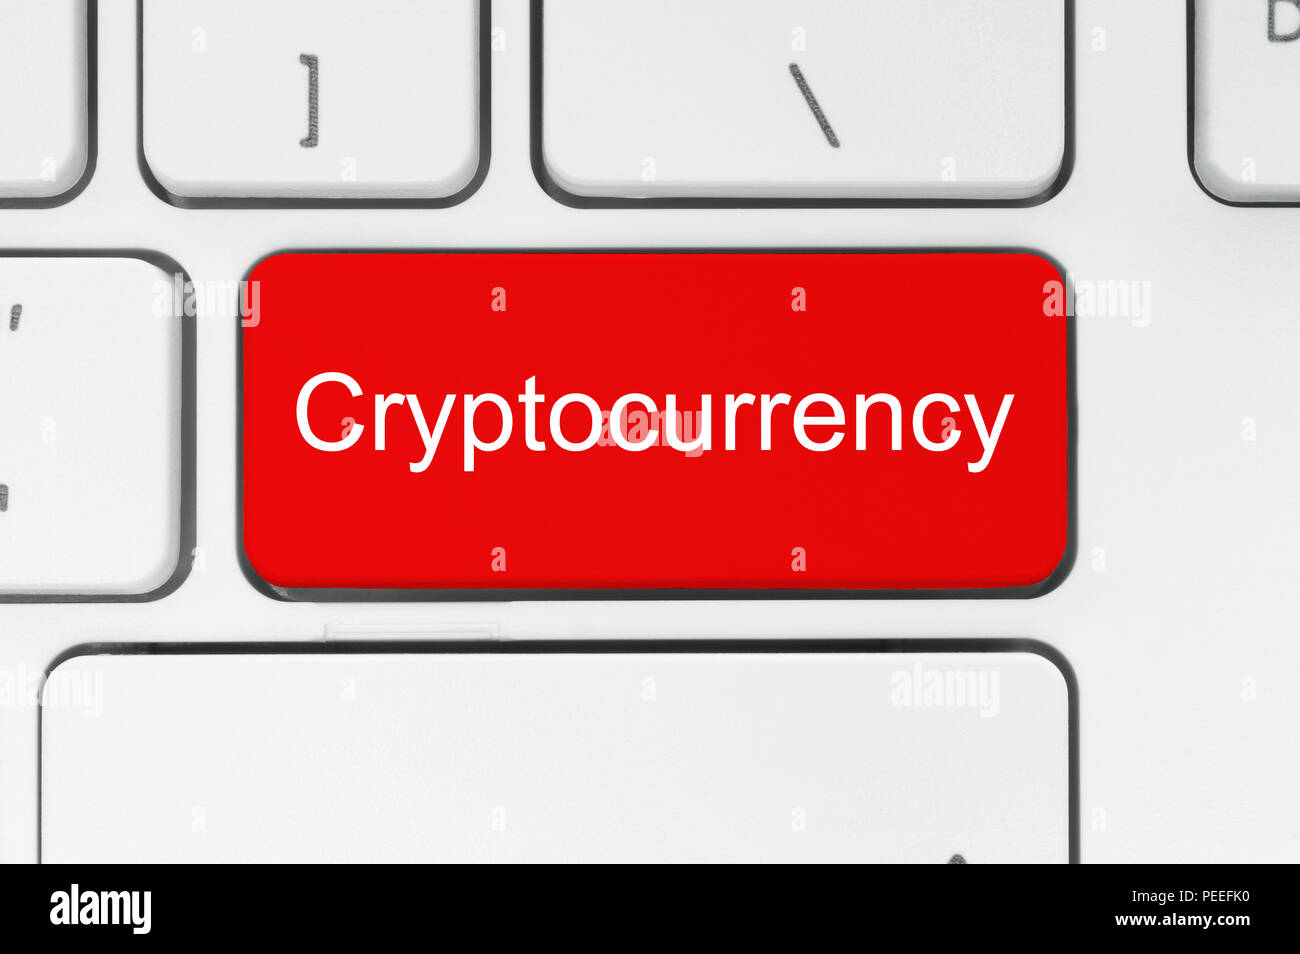 Concept Cryptocurrency. Bouton rouge avec Cryptocurrency mot sur le clavier, close-up Banque D'Images